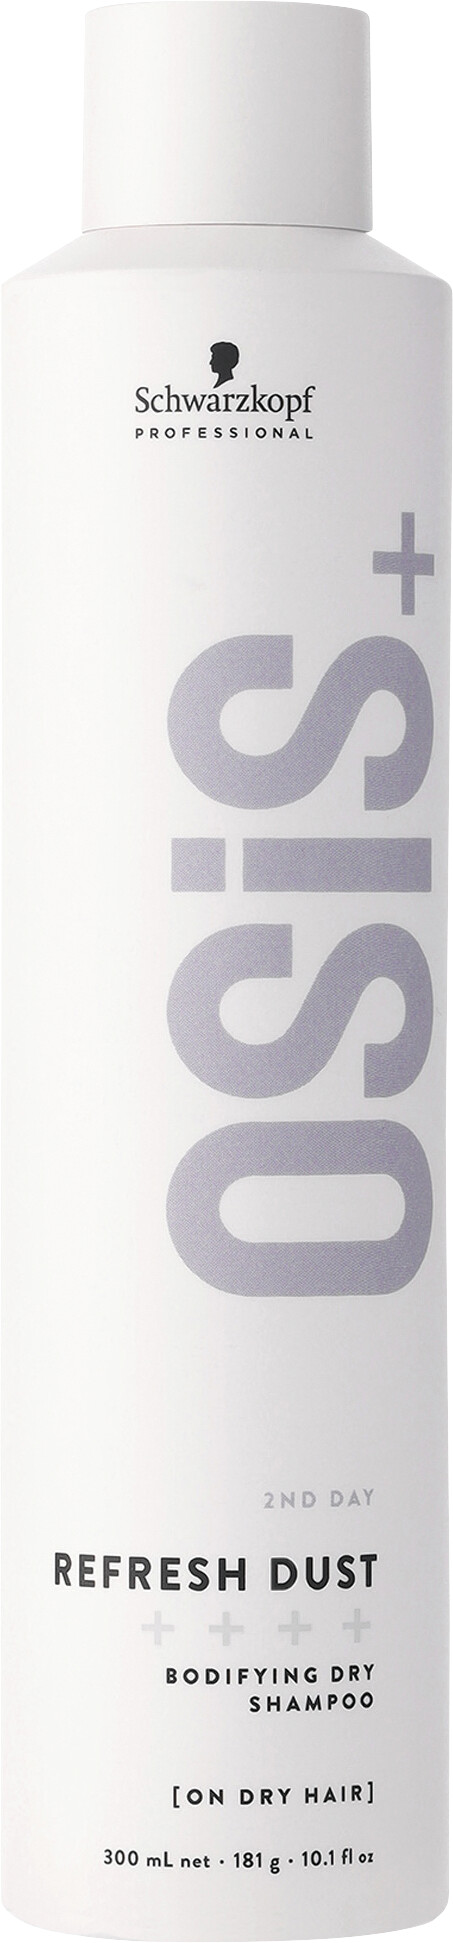 Schwarzkopf Professional Osis+ Refresh Dust Bodifying Dry Shampoo 300ml